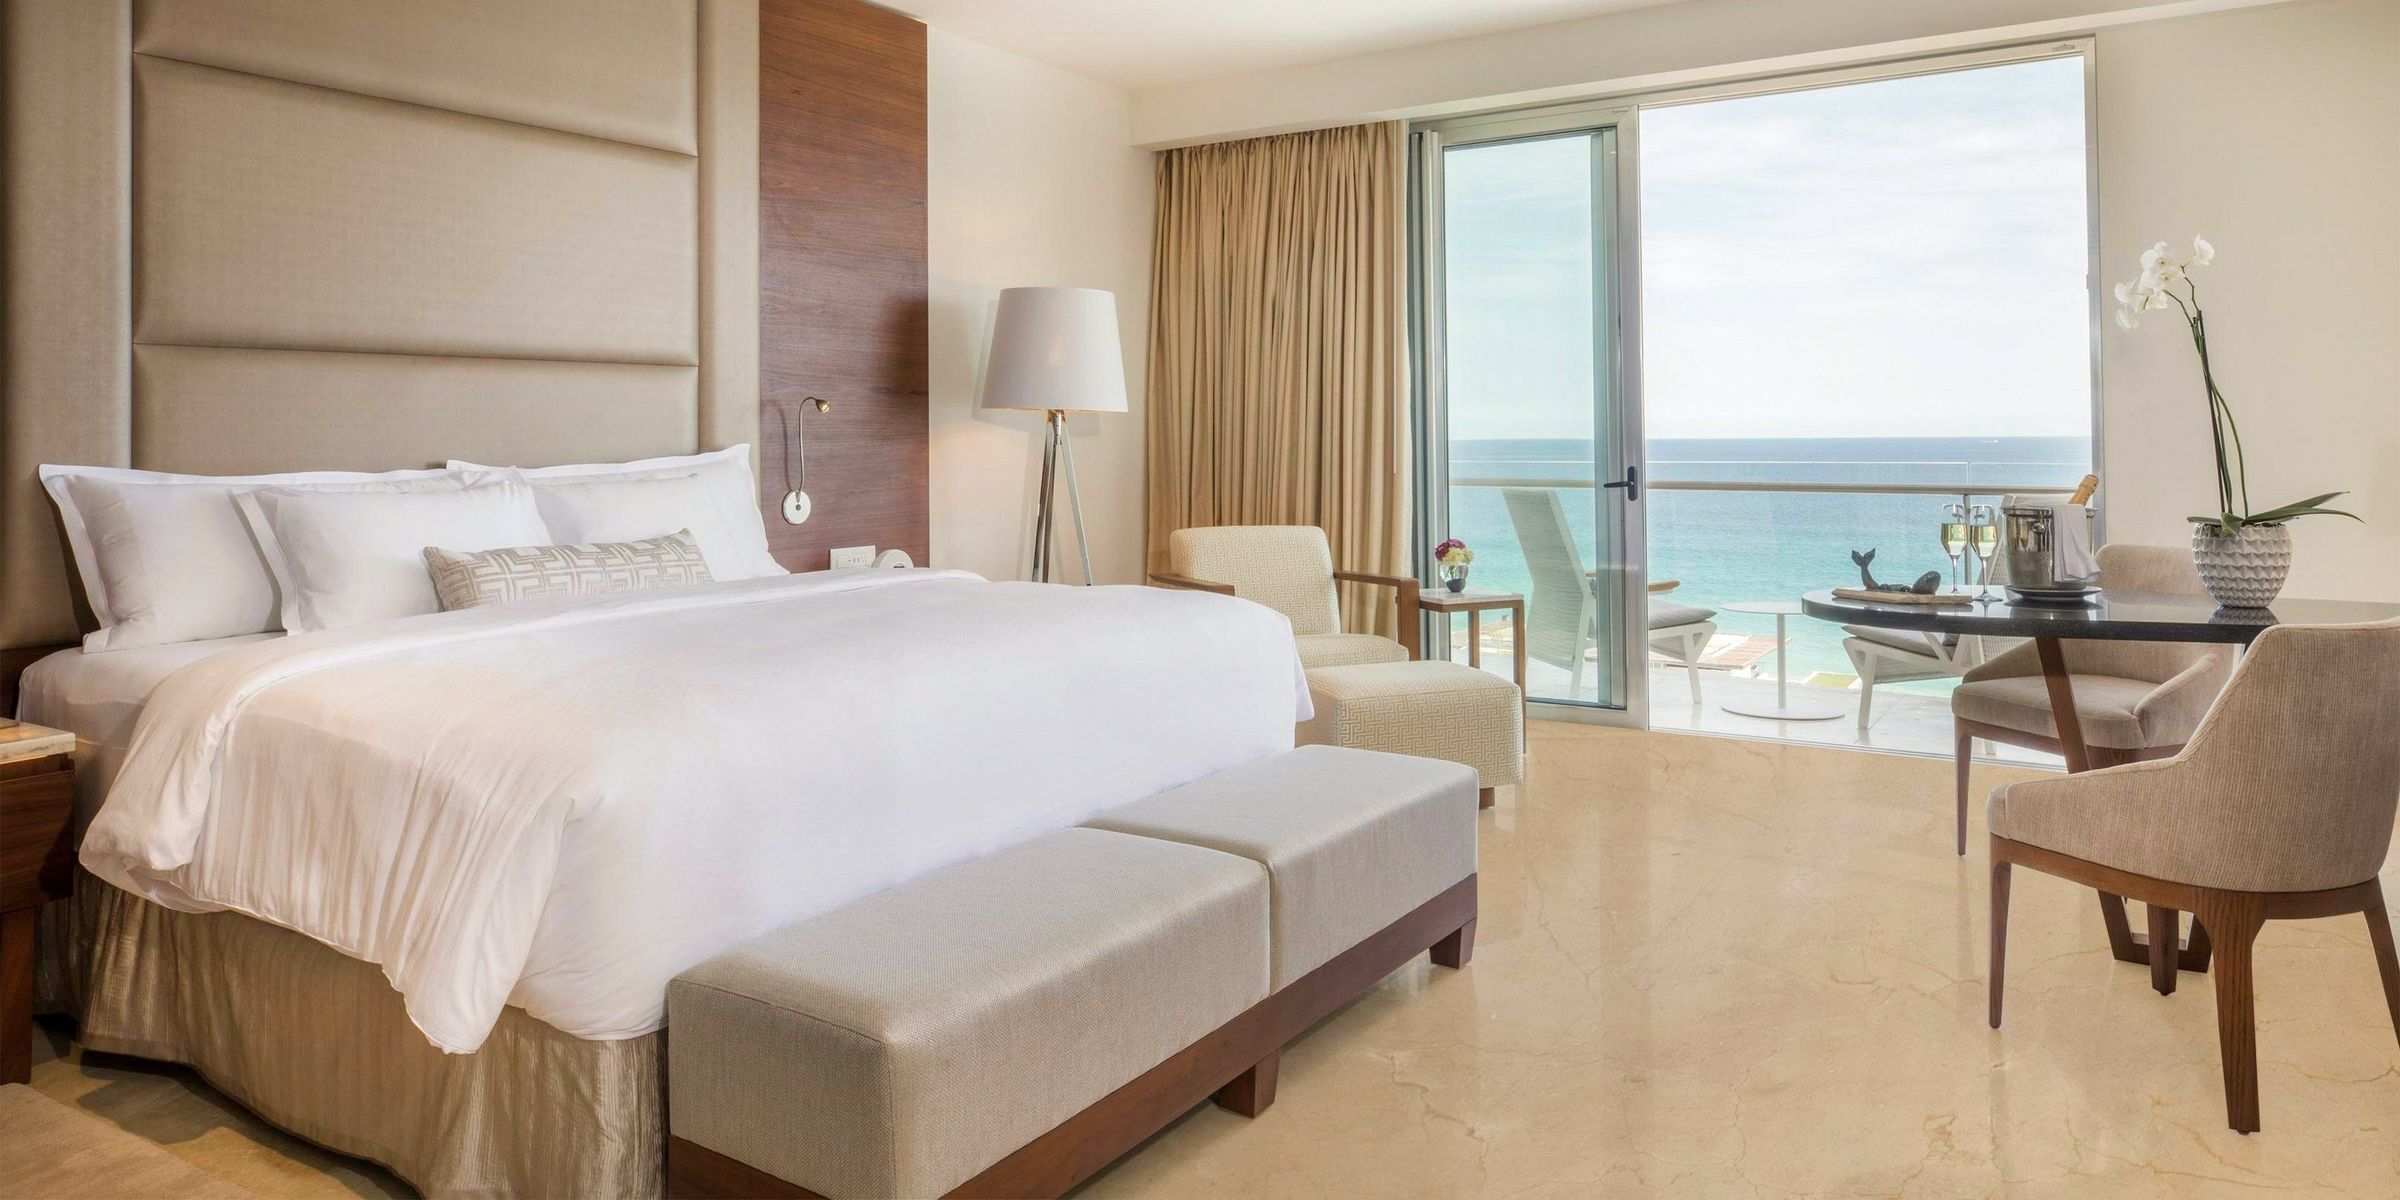 Honeymoon suite ocean view Los Cabos